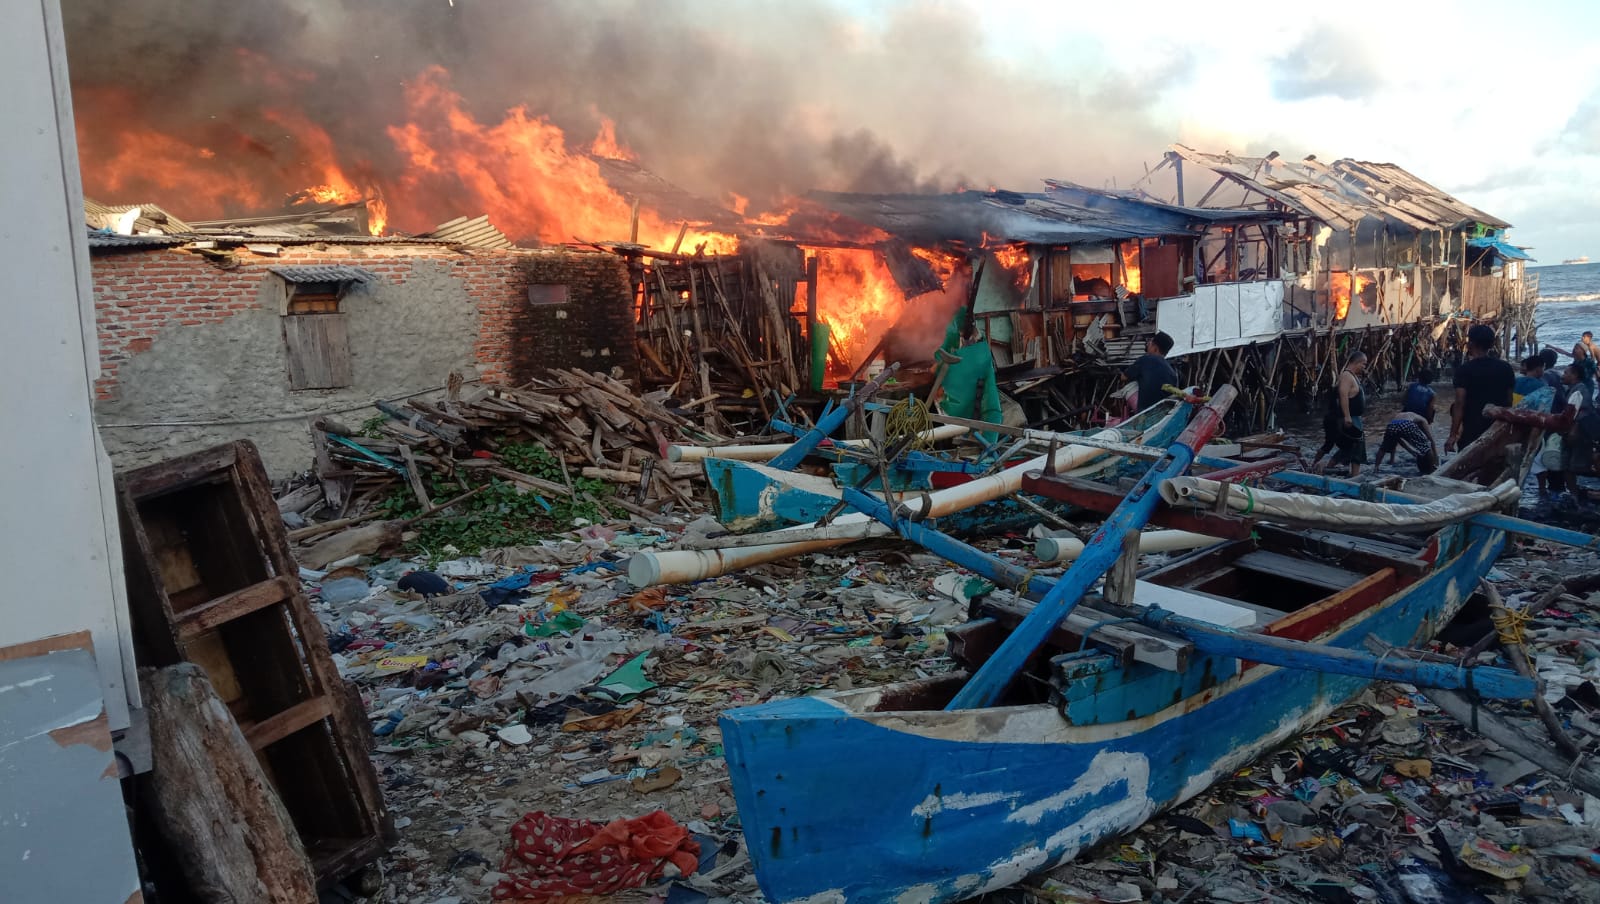 BREAKING NEWS!! Sejumlah Rumah di Perkampungan Nelayan Pesisir Bandar Lampung Terbakar